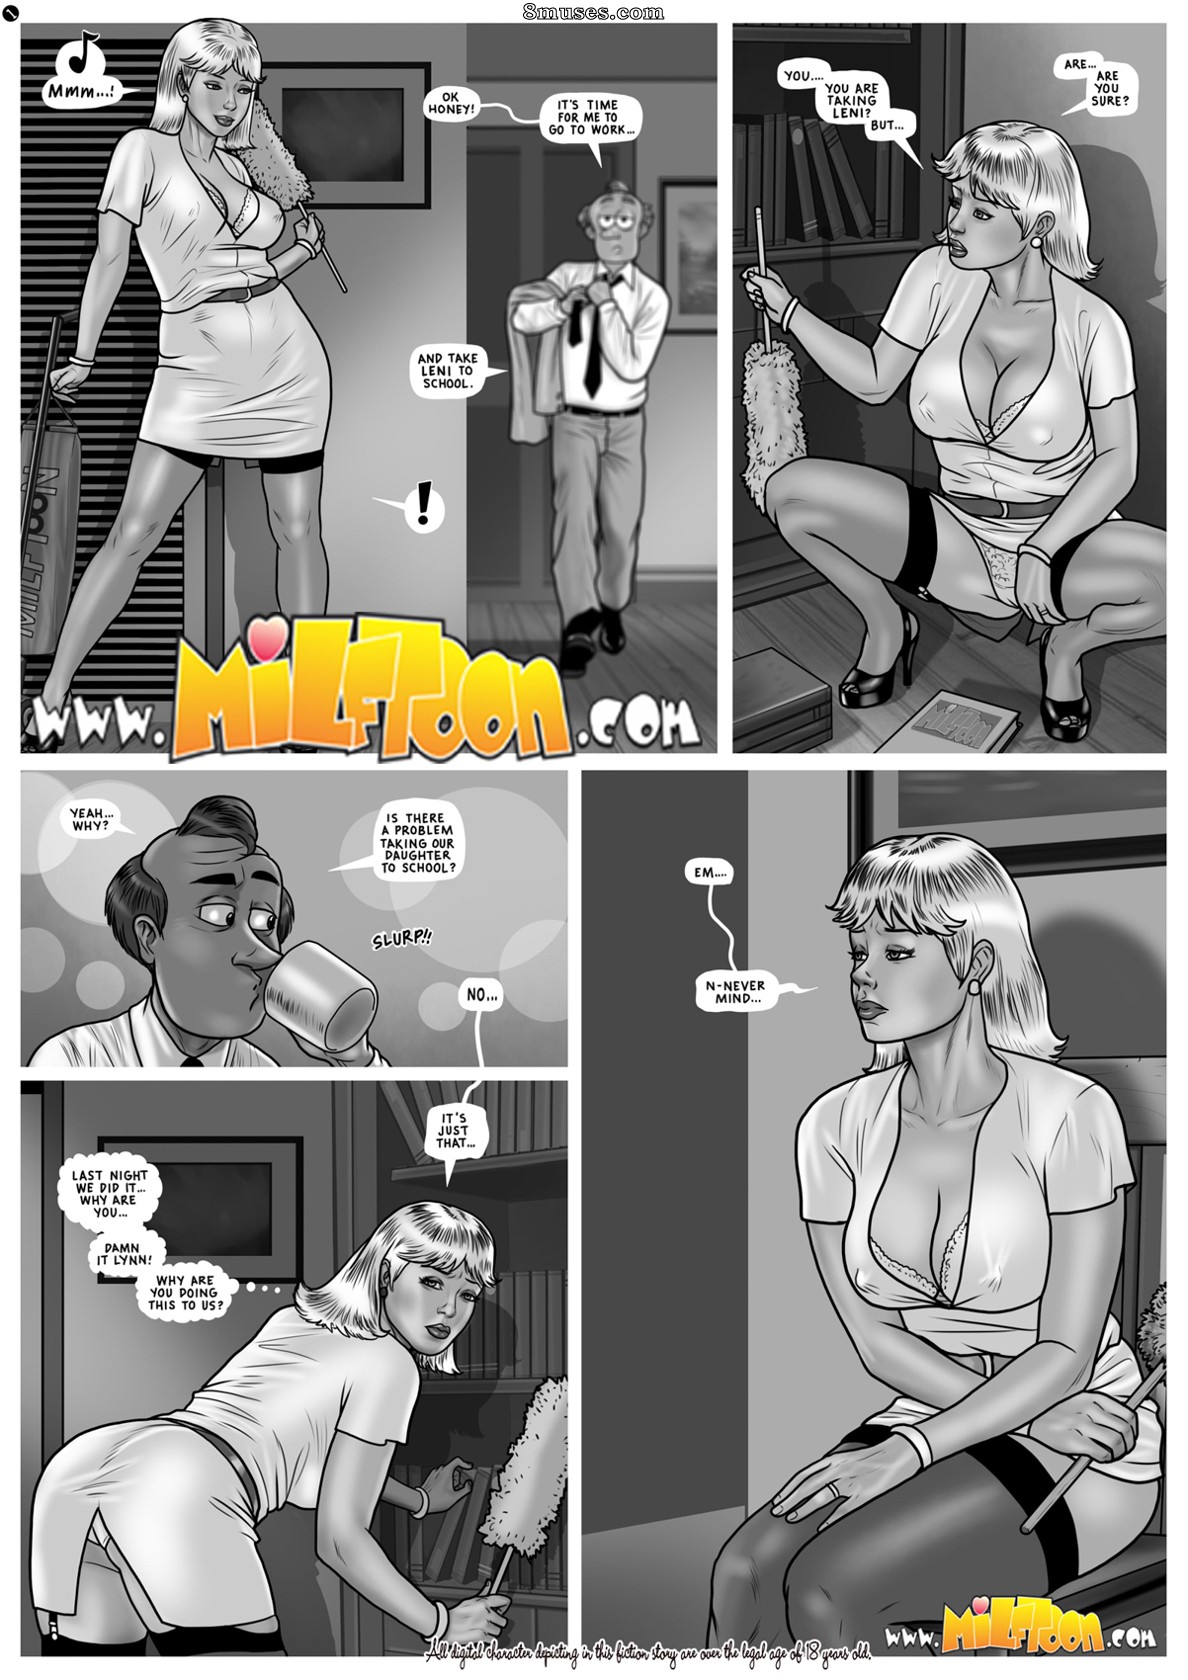 Cartoon comic porn strips